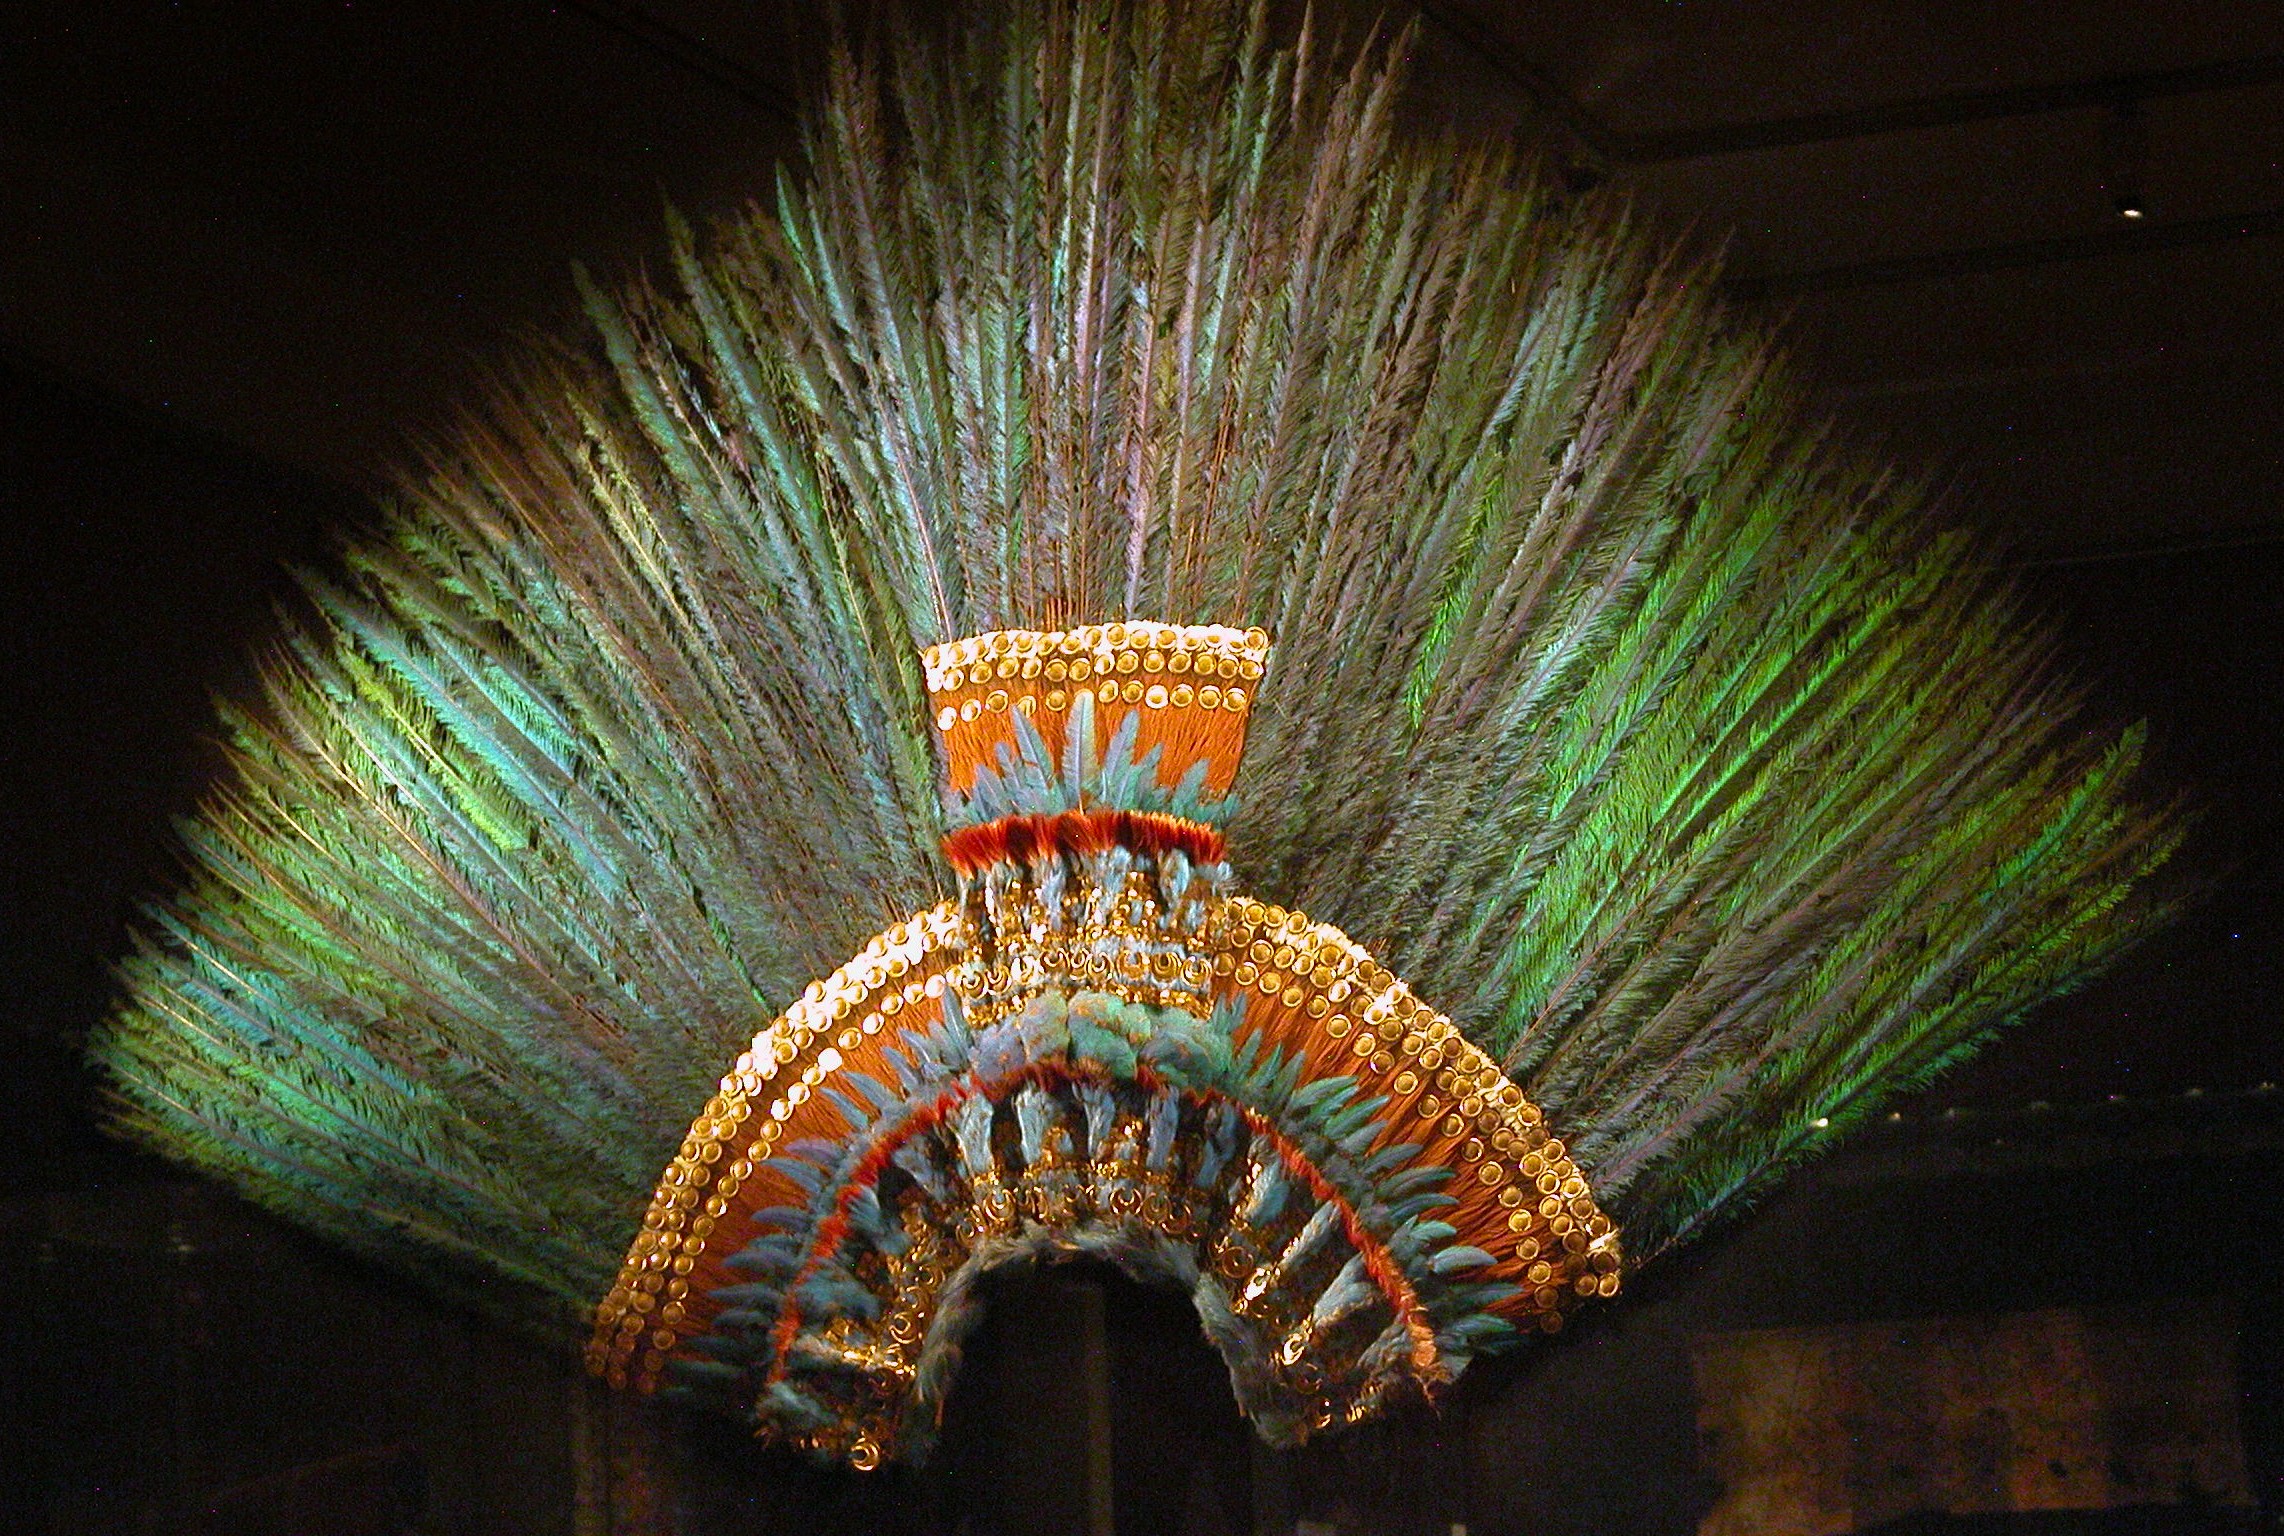 http://www.thehistoryblog.com/wp-content/uploads/2012/04/Montezuma-headdress-before-restoration.jpg